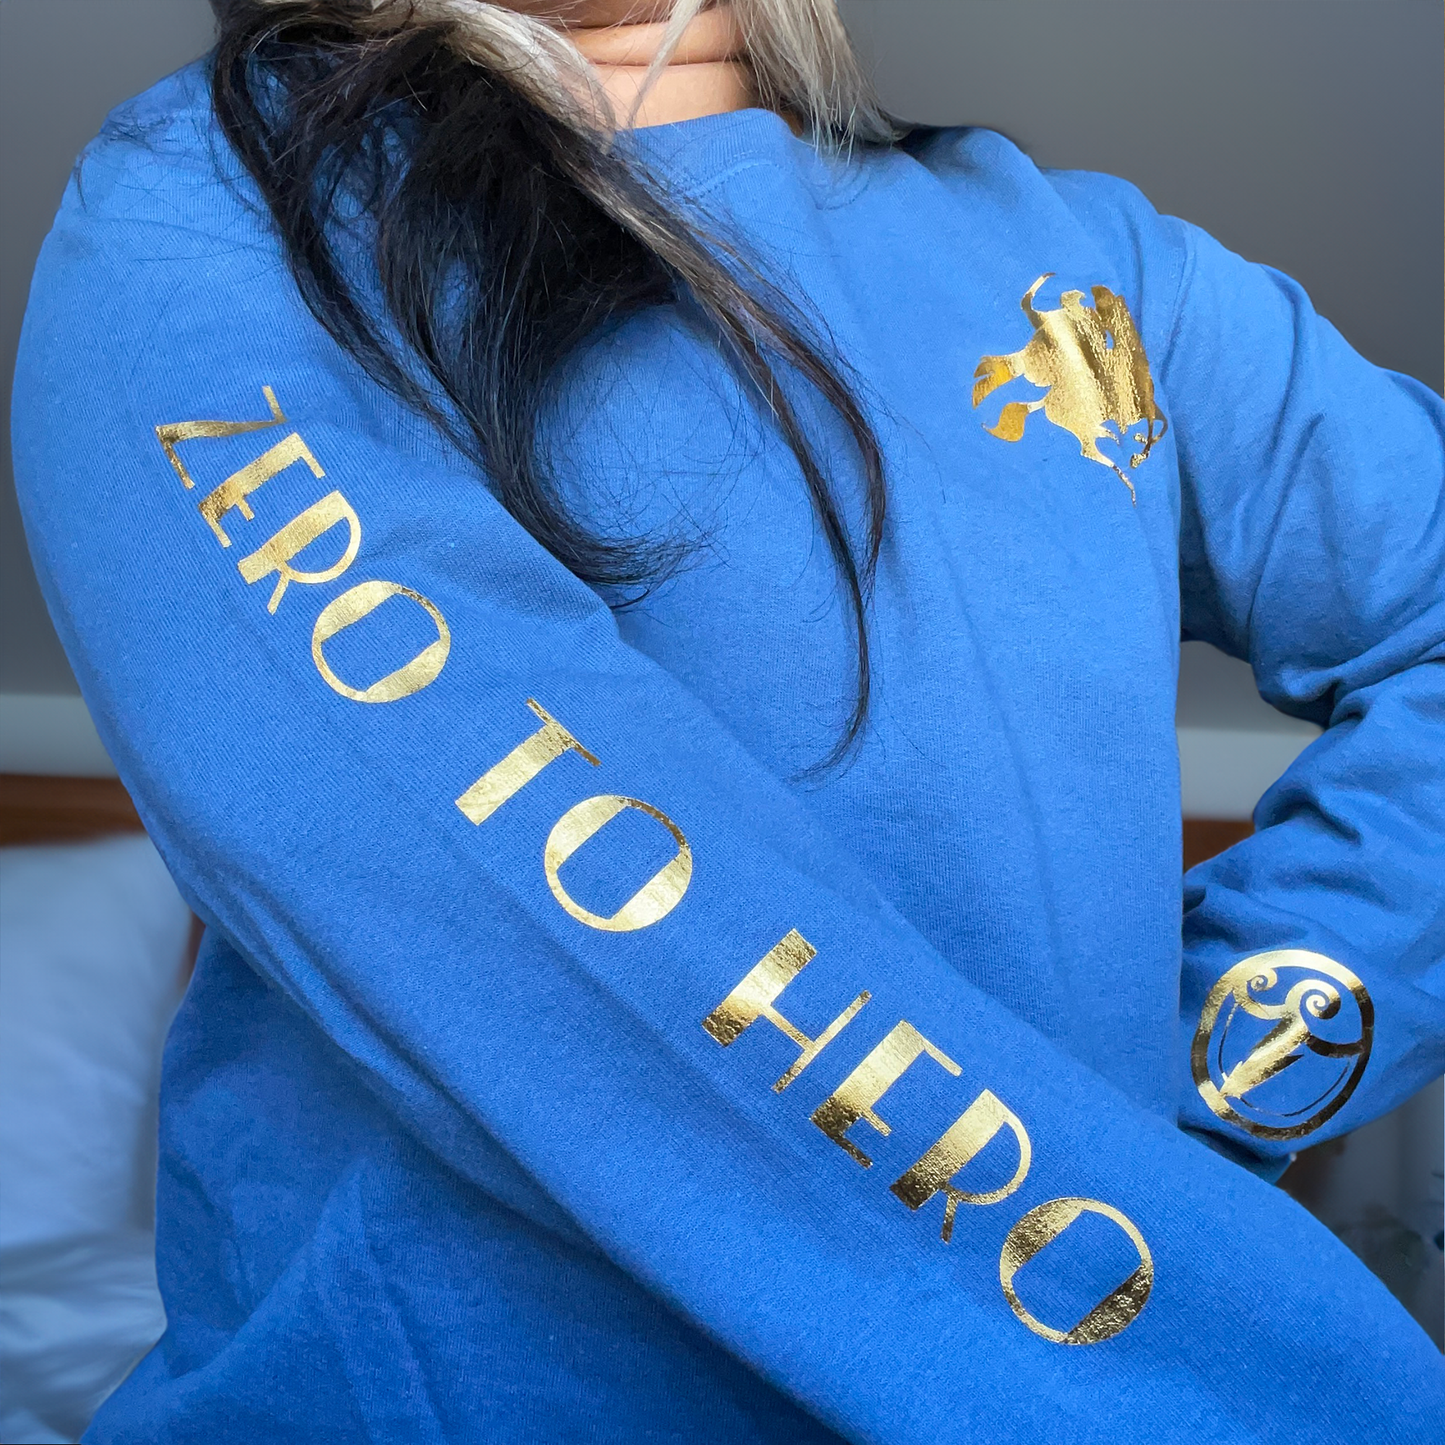 Zero to Hero Decorative Gold Foil Hercules Blue Adult Cotton Crew Neck Sweater